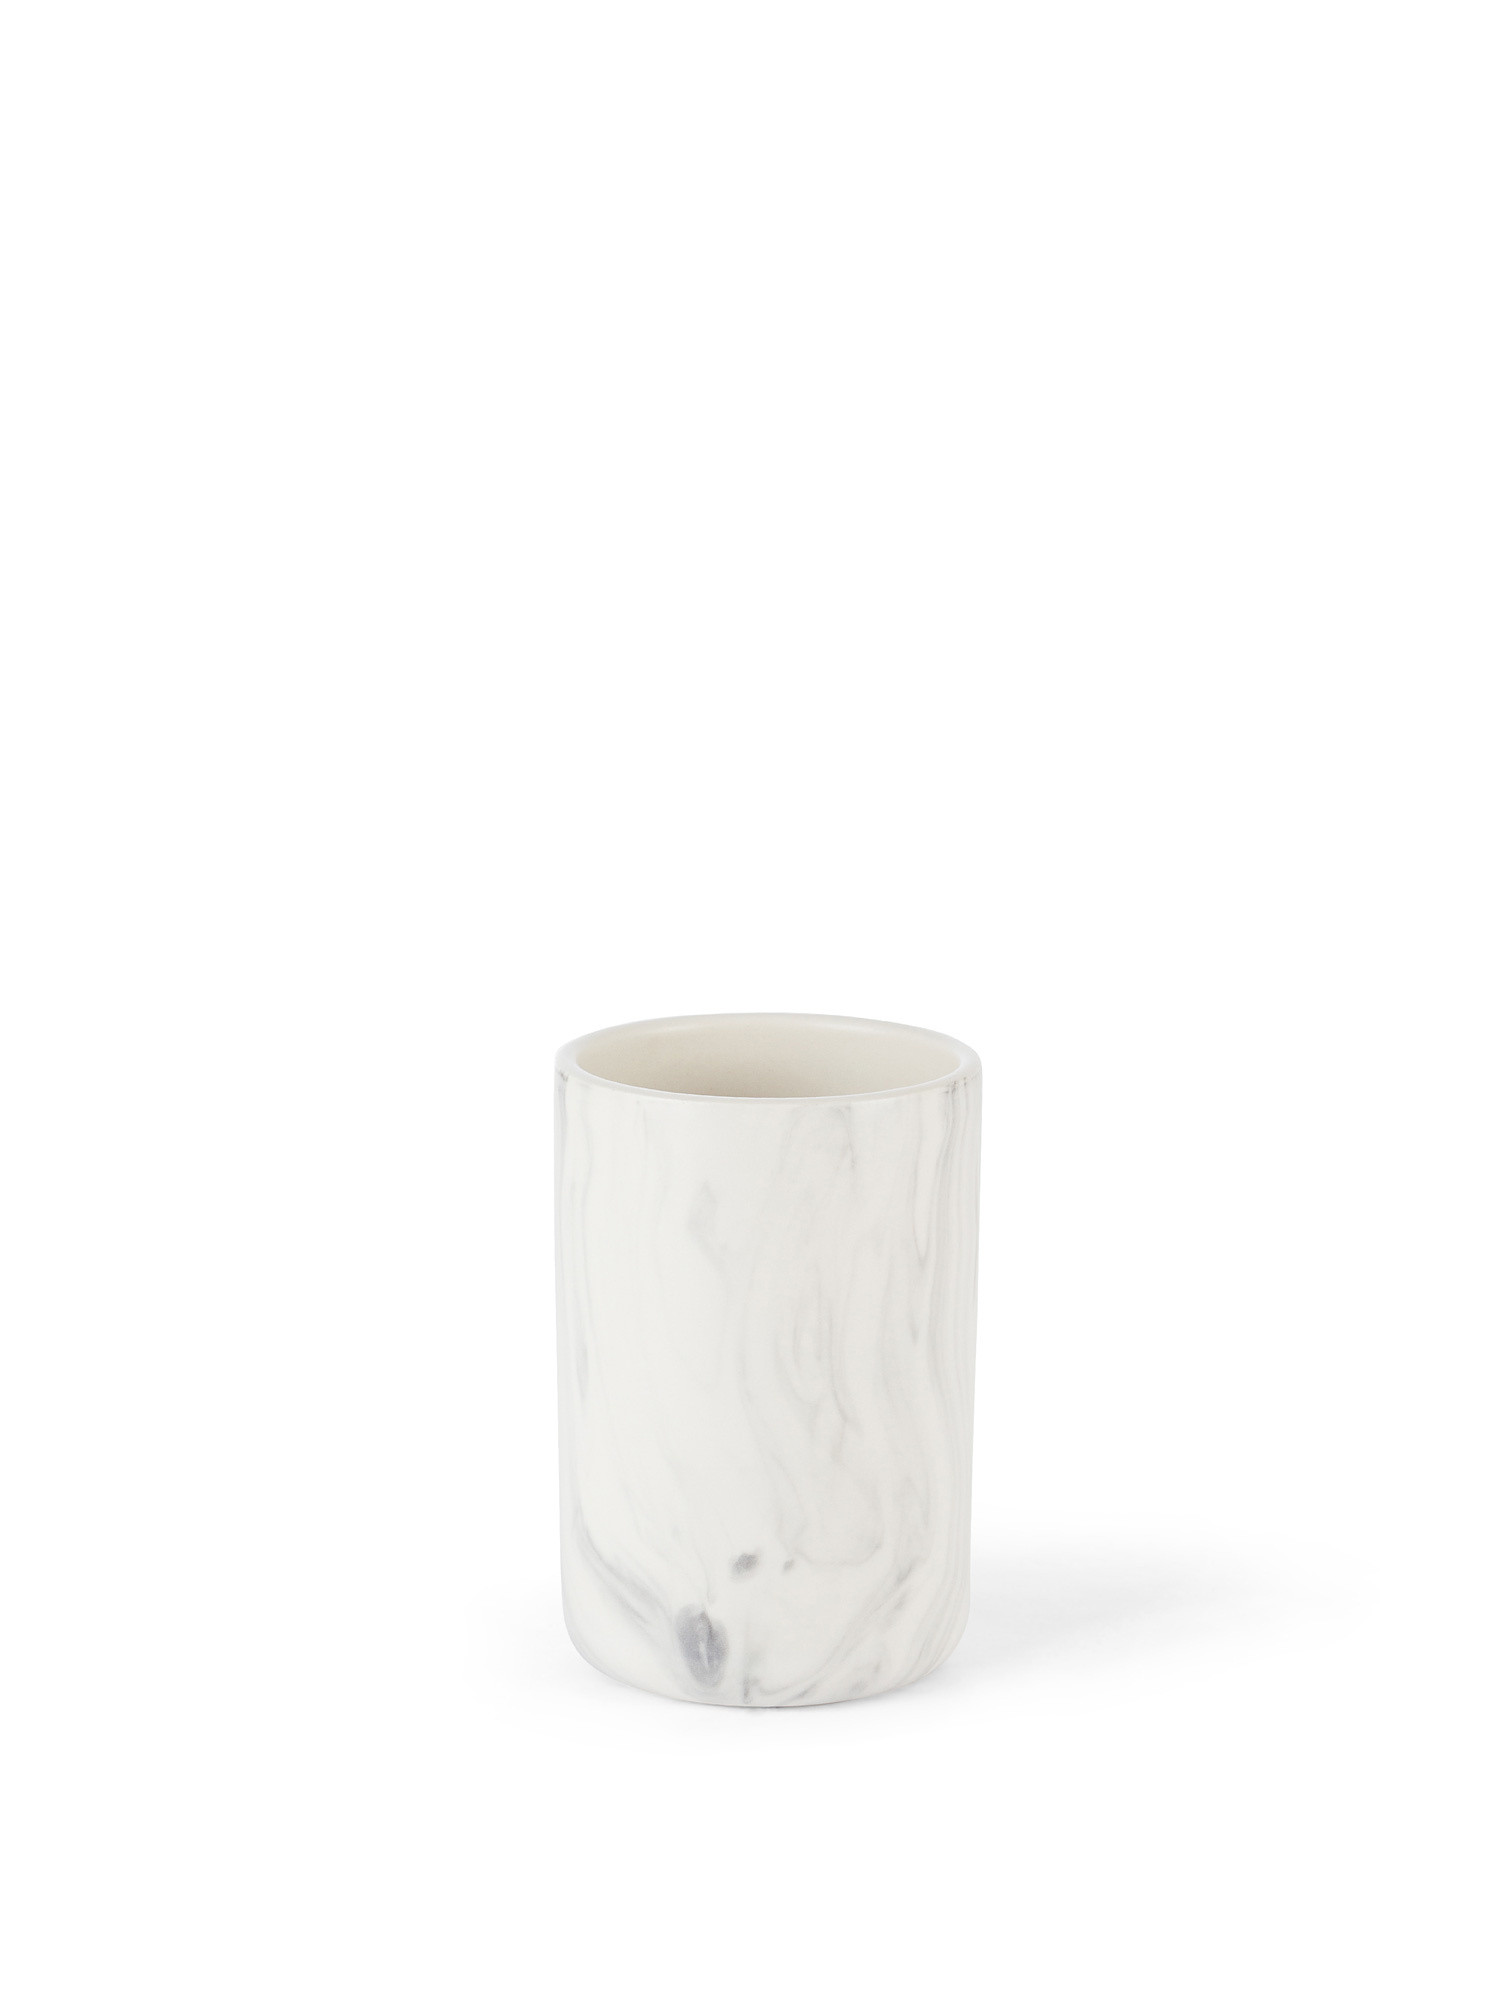 Porta spazzolini ceramica portoghese effetto marmo, Bianco/Nero, large image number 0